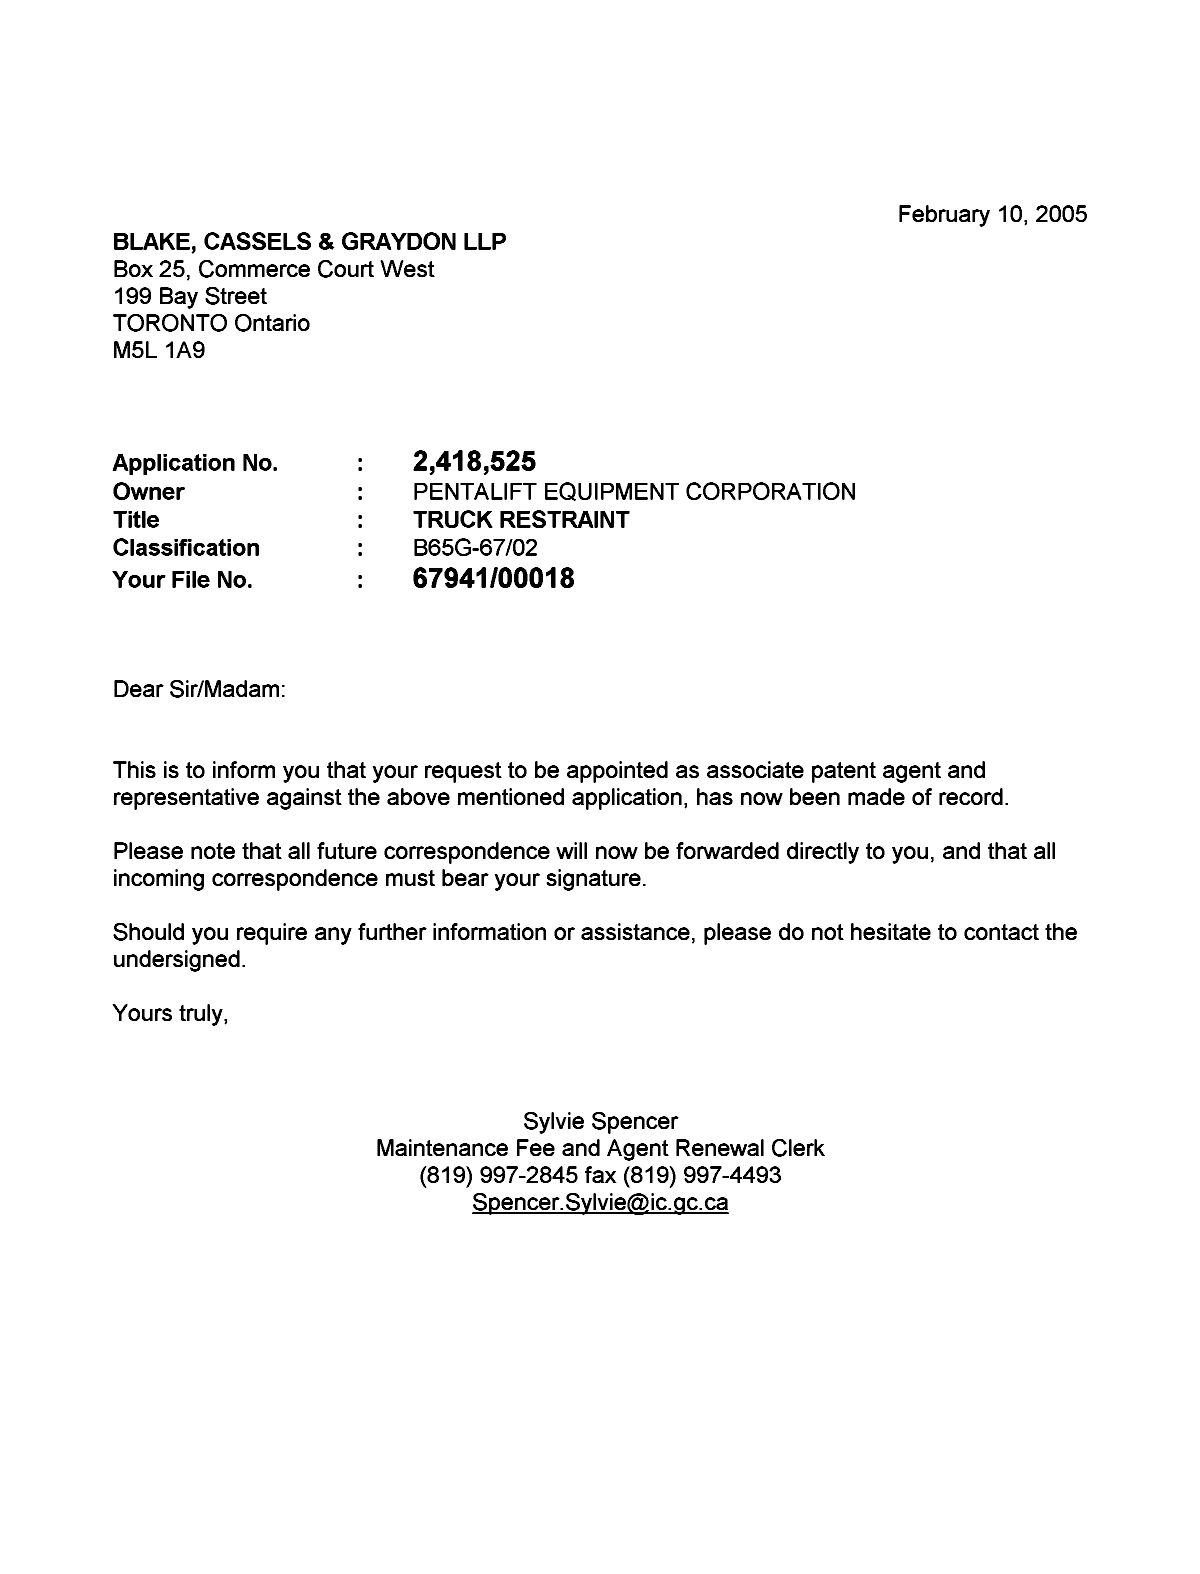 Canadian Patent Document 2418525. Correspondence 20050210. Image 1 of 1